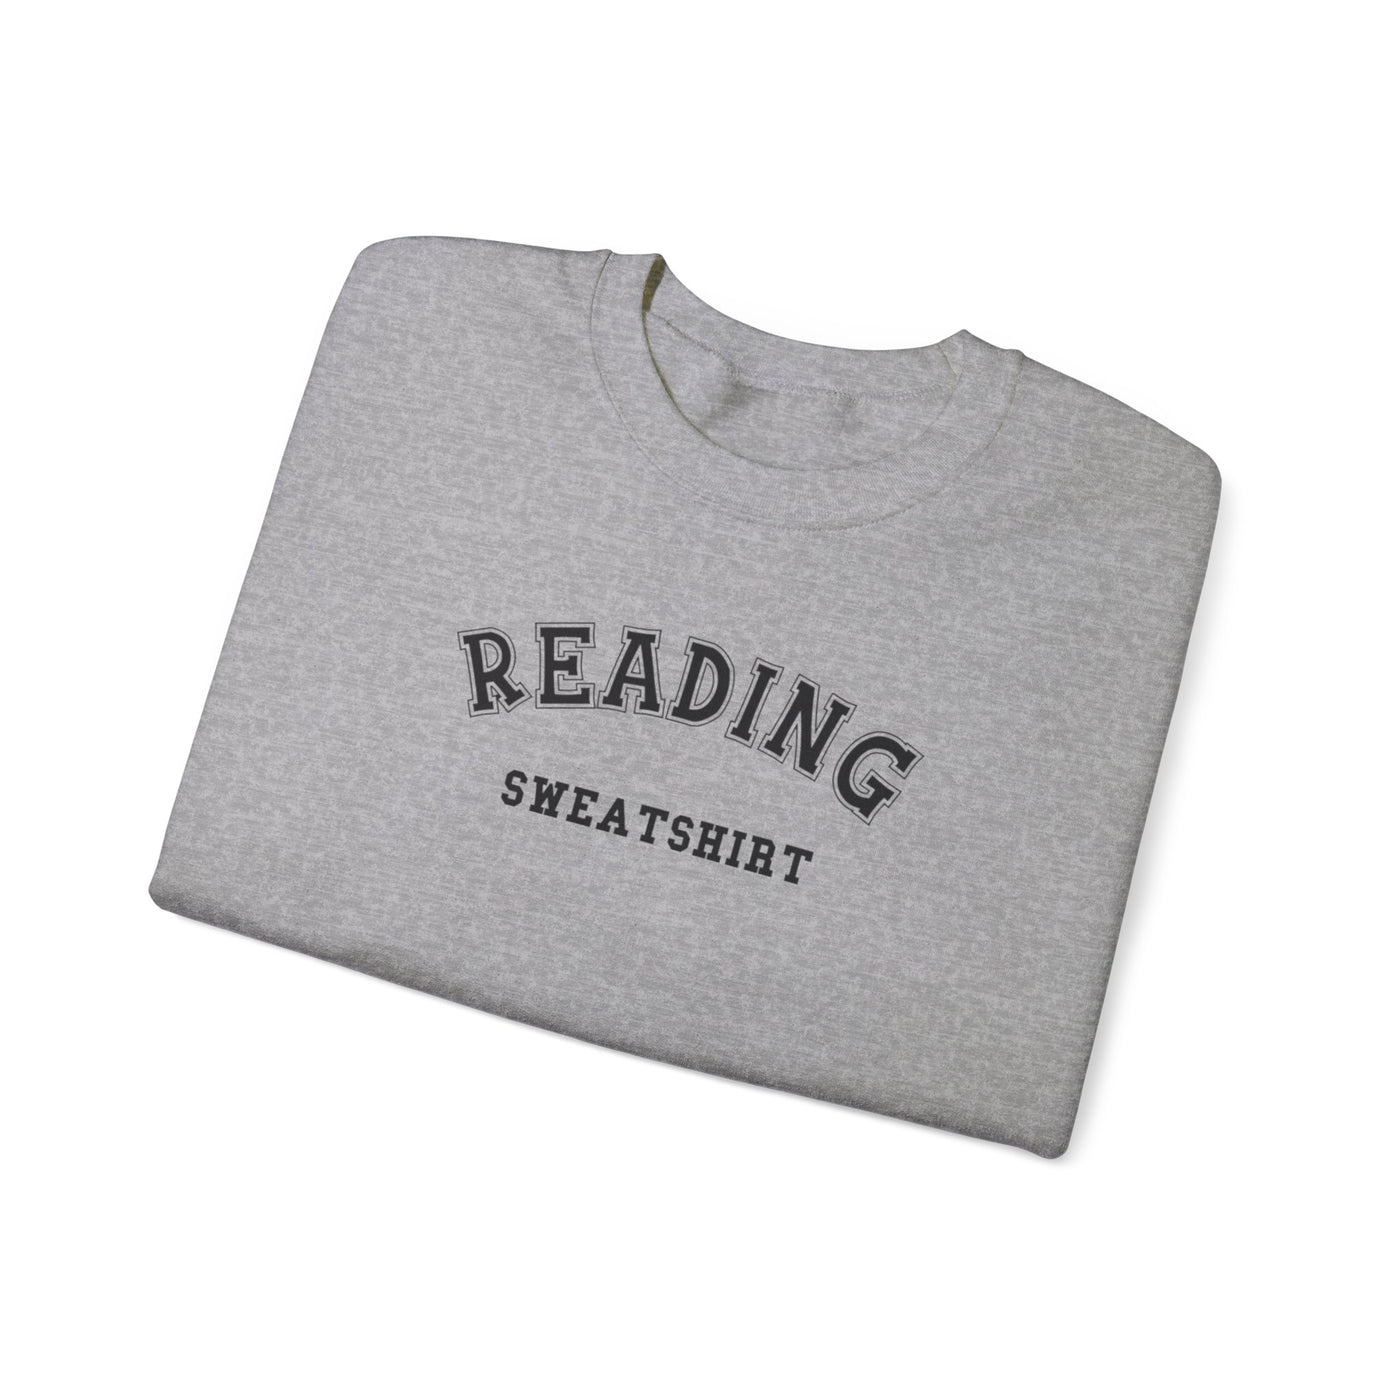 Crewneck Sweatshirt | READING Sweater